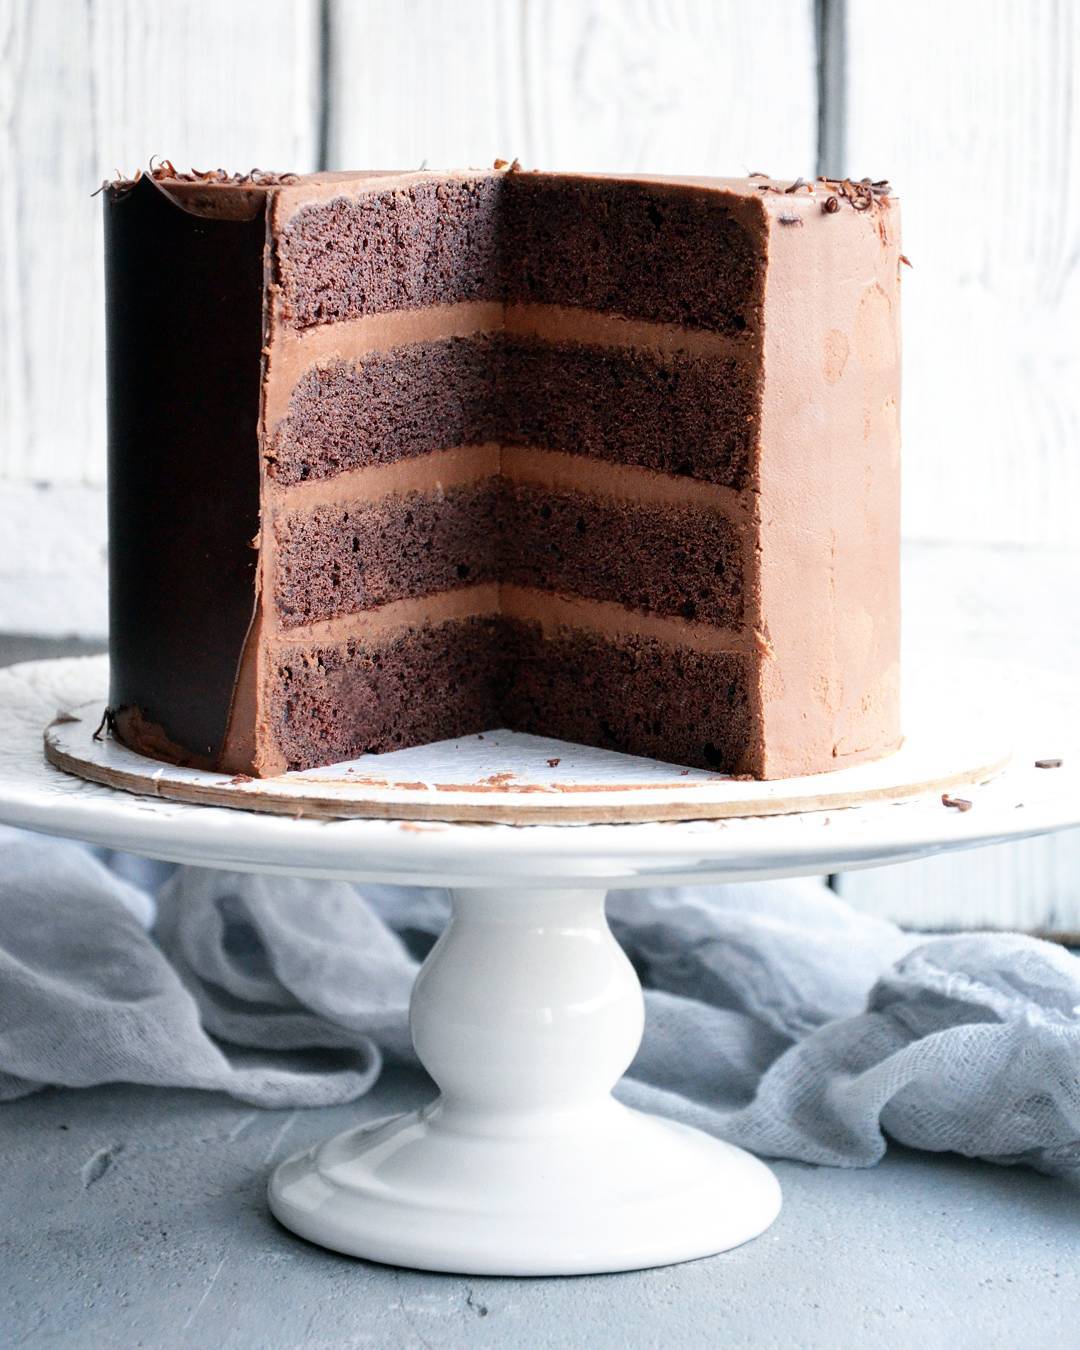 Chocolate Layer Cake With Chocolate Mascarpone Cream Recipe By Mariya The Feedfeed,Weber Spirit E 310 Parts